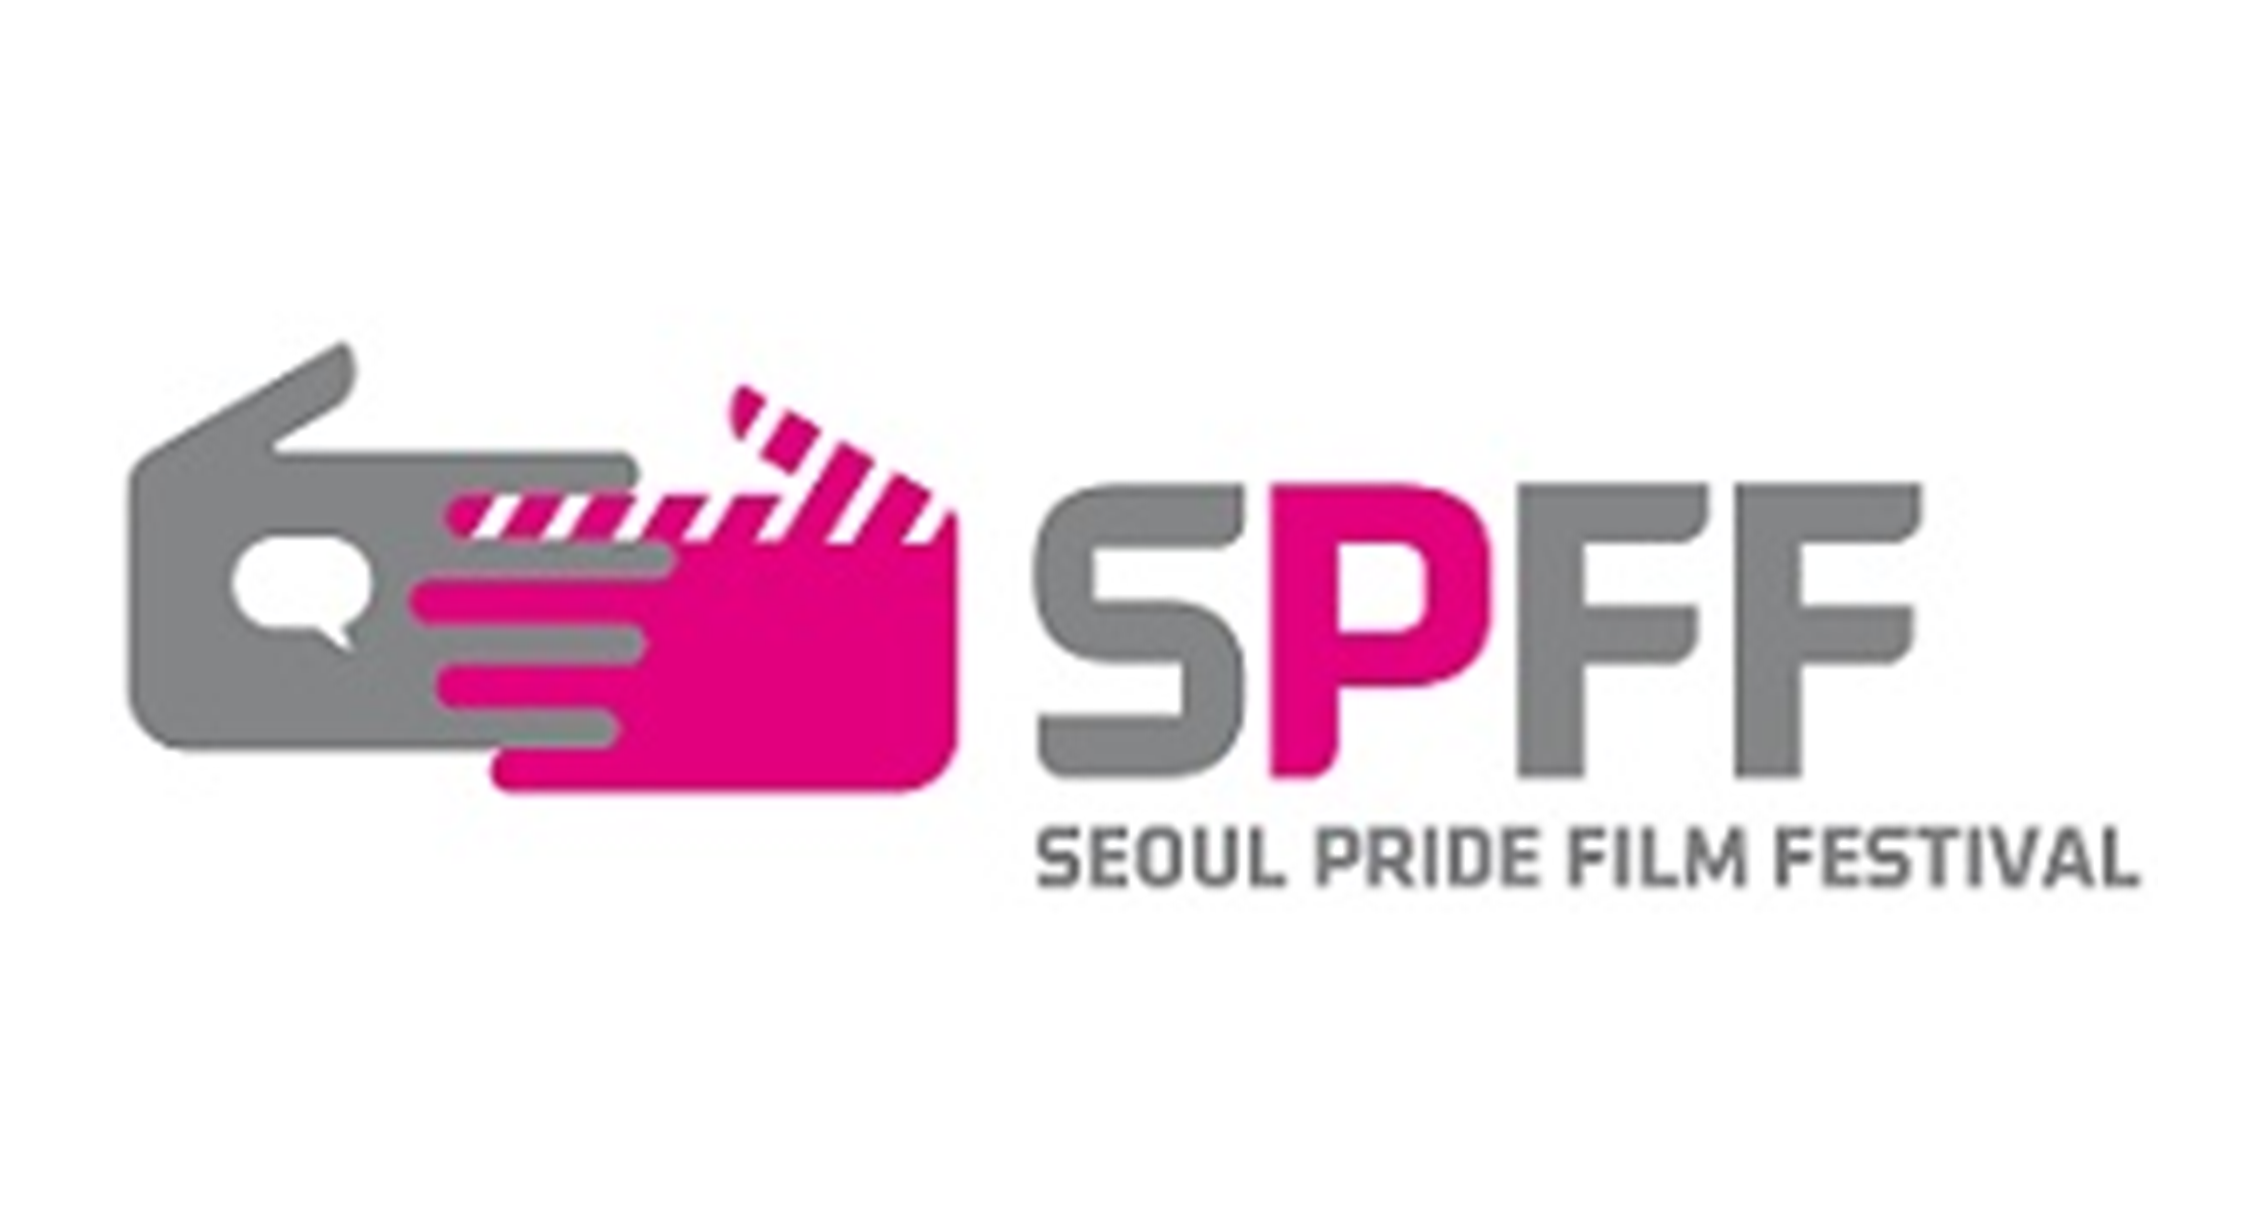 Seoul PRIDE Film Festival